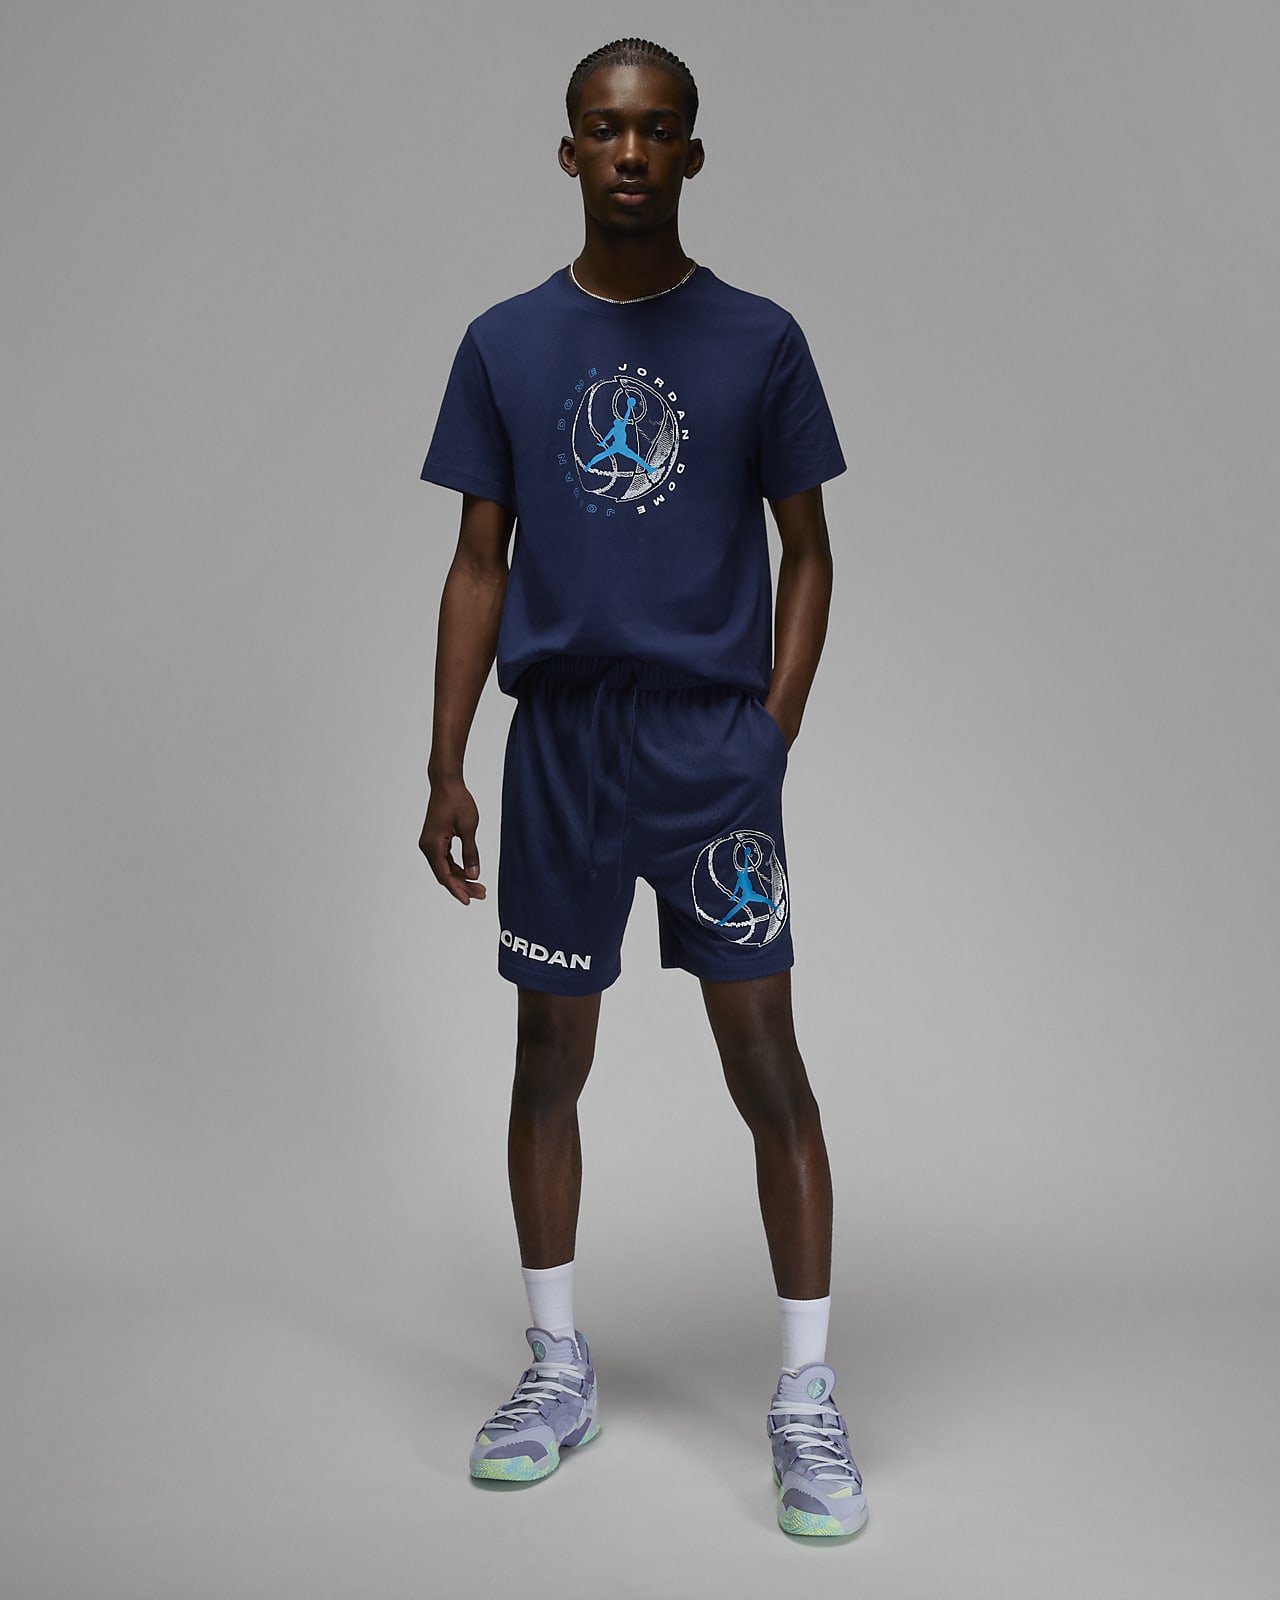 JORDAN Basketball shorts DRI-FIT SPORT made of mesh